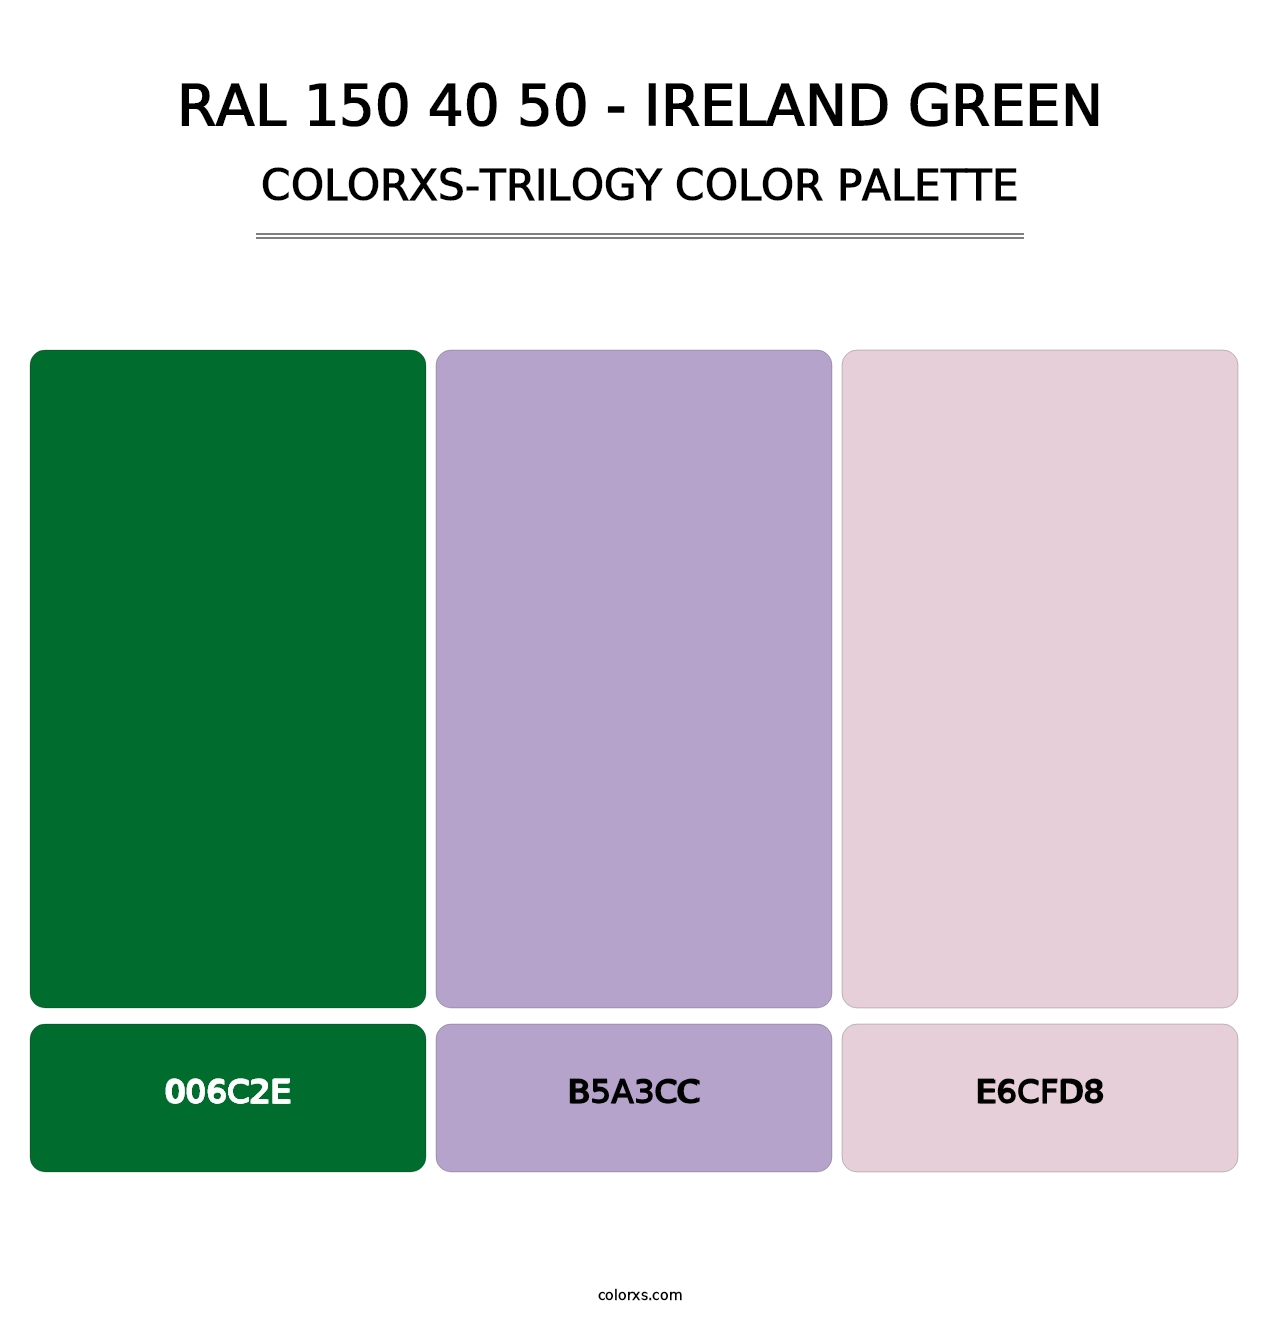 RAL 150 40 50 - Ireland Green - Colorxs Trilogy Palette